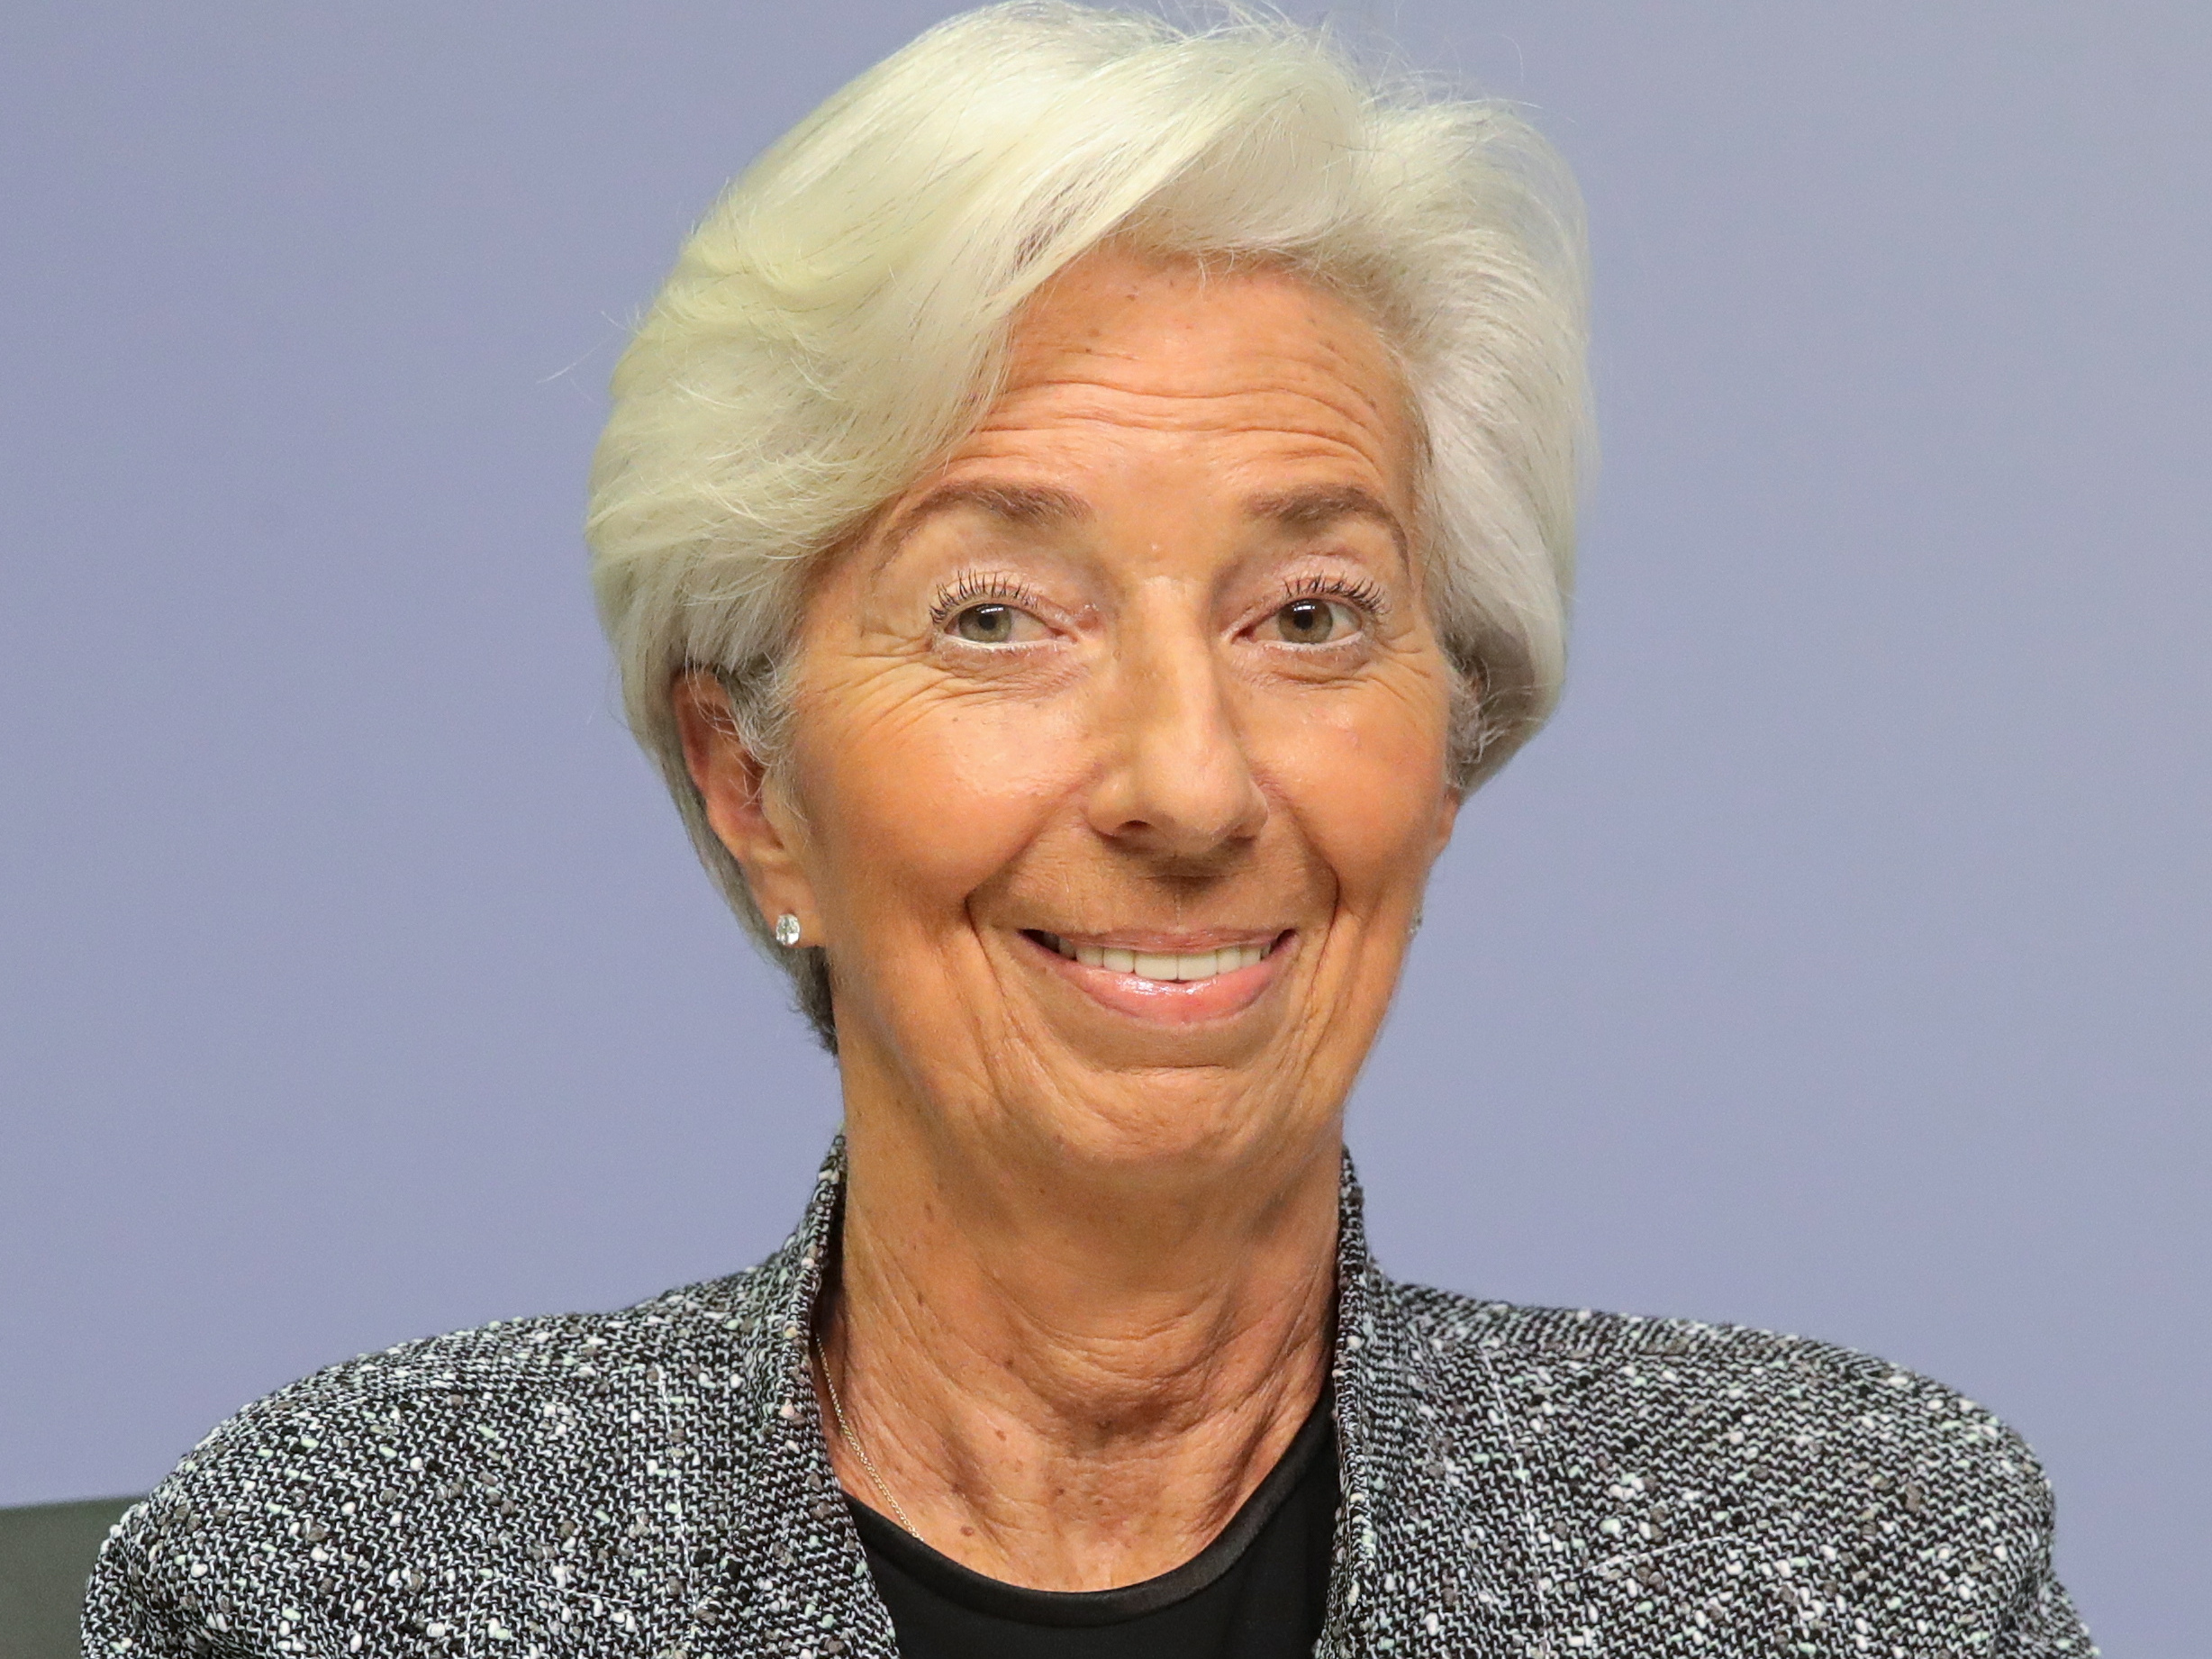 ECB-president Christine Lagarde